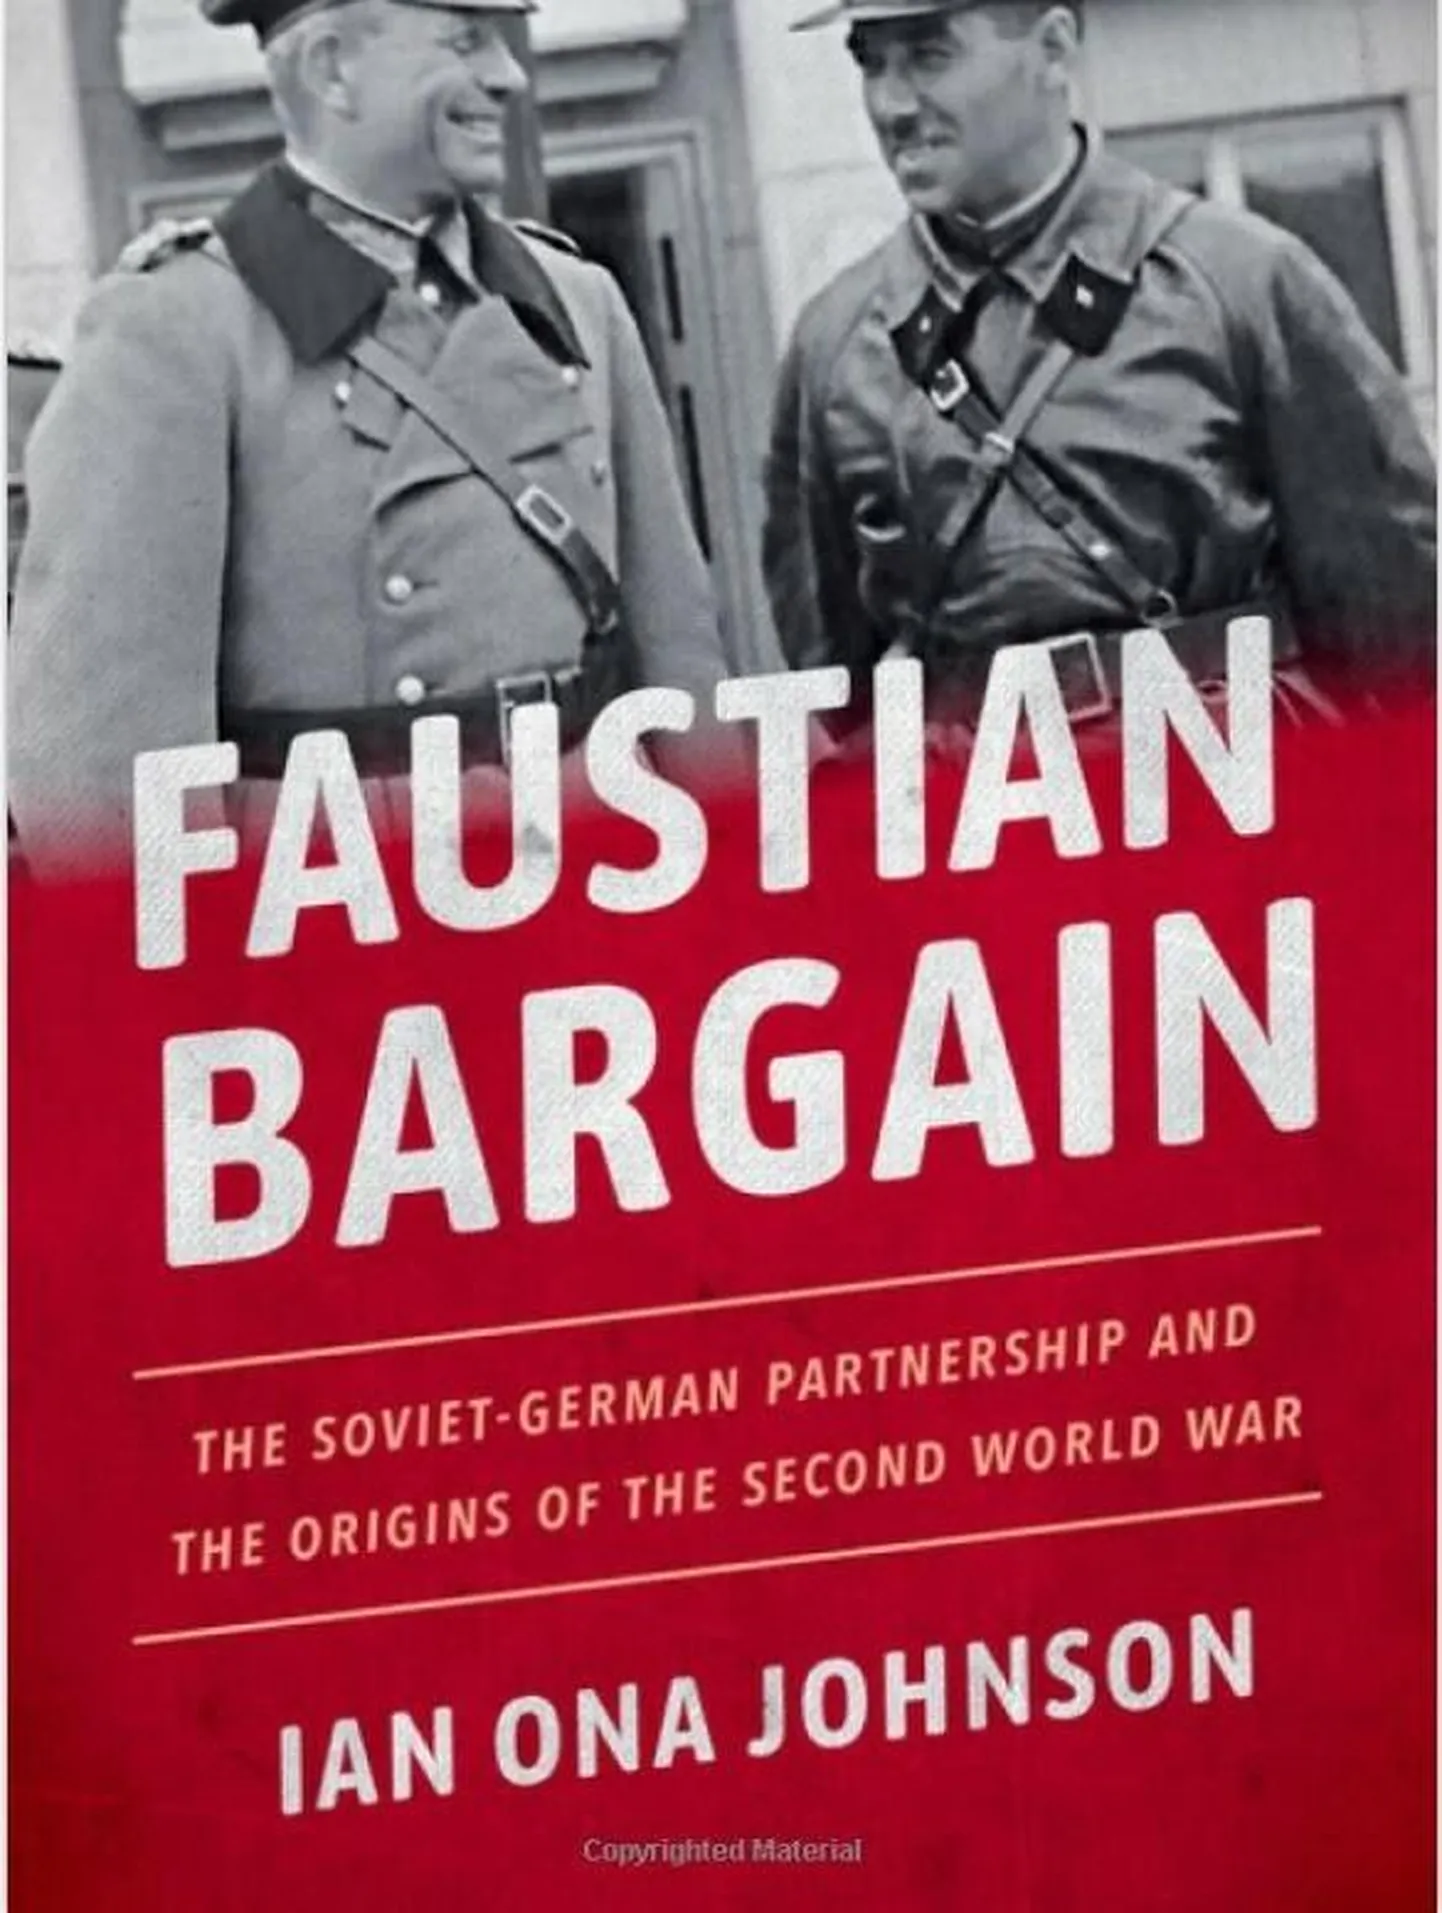 Ian Ona Johnson
«Faustian Bargain. The Soviet-German Partnership and the Origins of the Second World War»
Oxford University Press 2021
350 lk